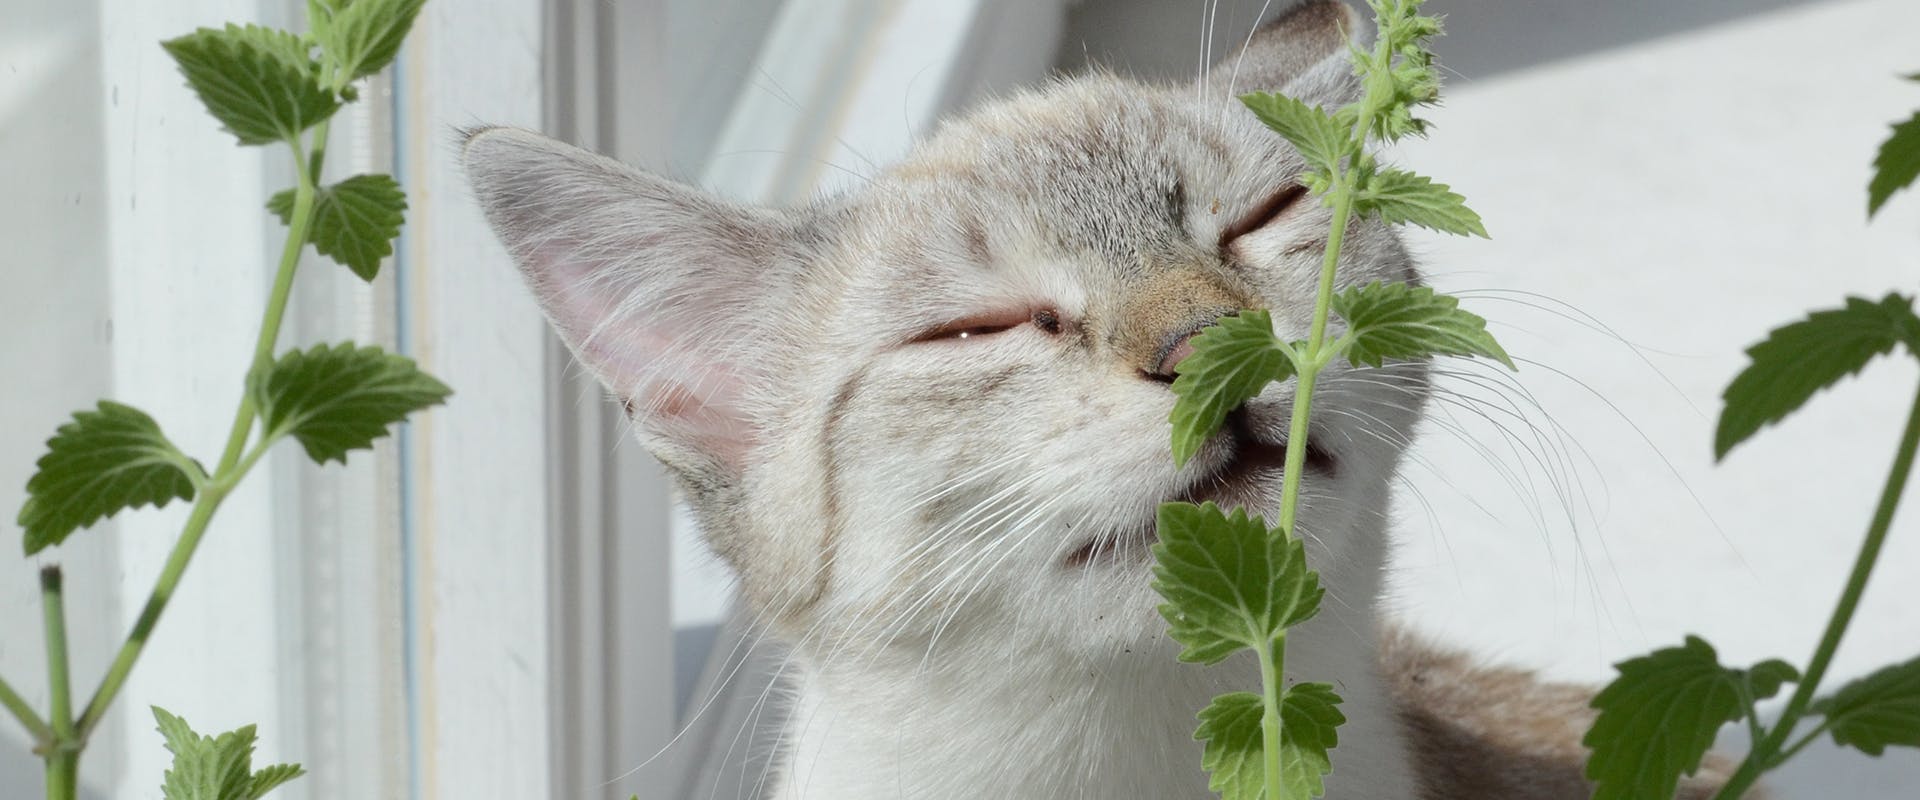 A cat smelling a catnip plant